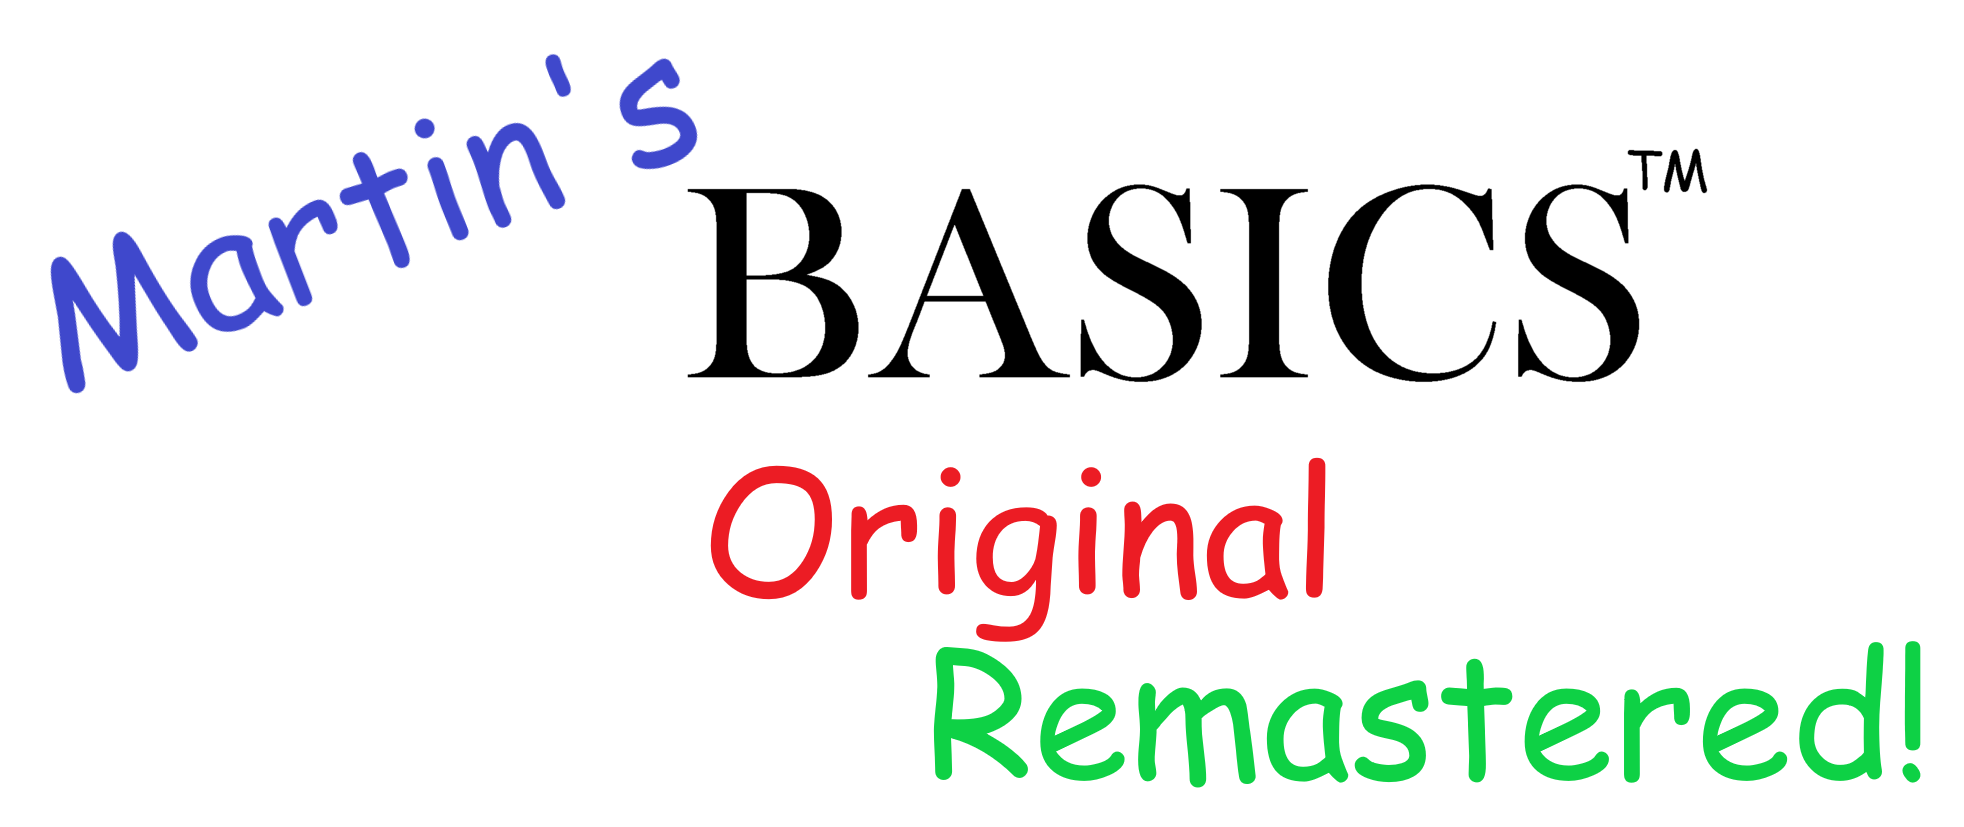 Martin's Basics Original Remastered!